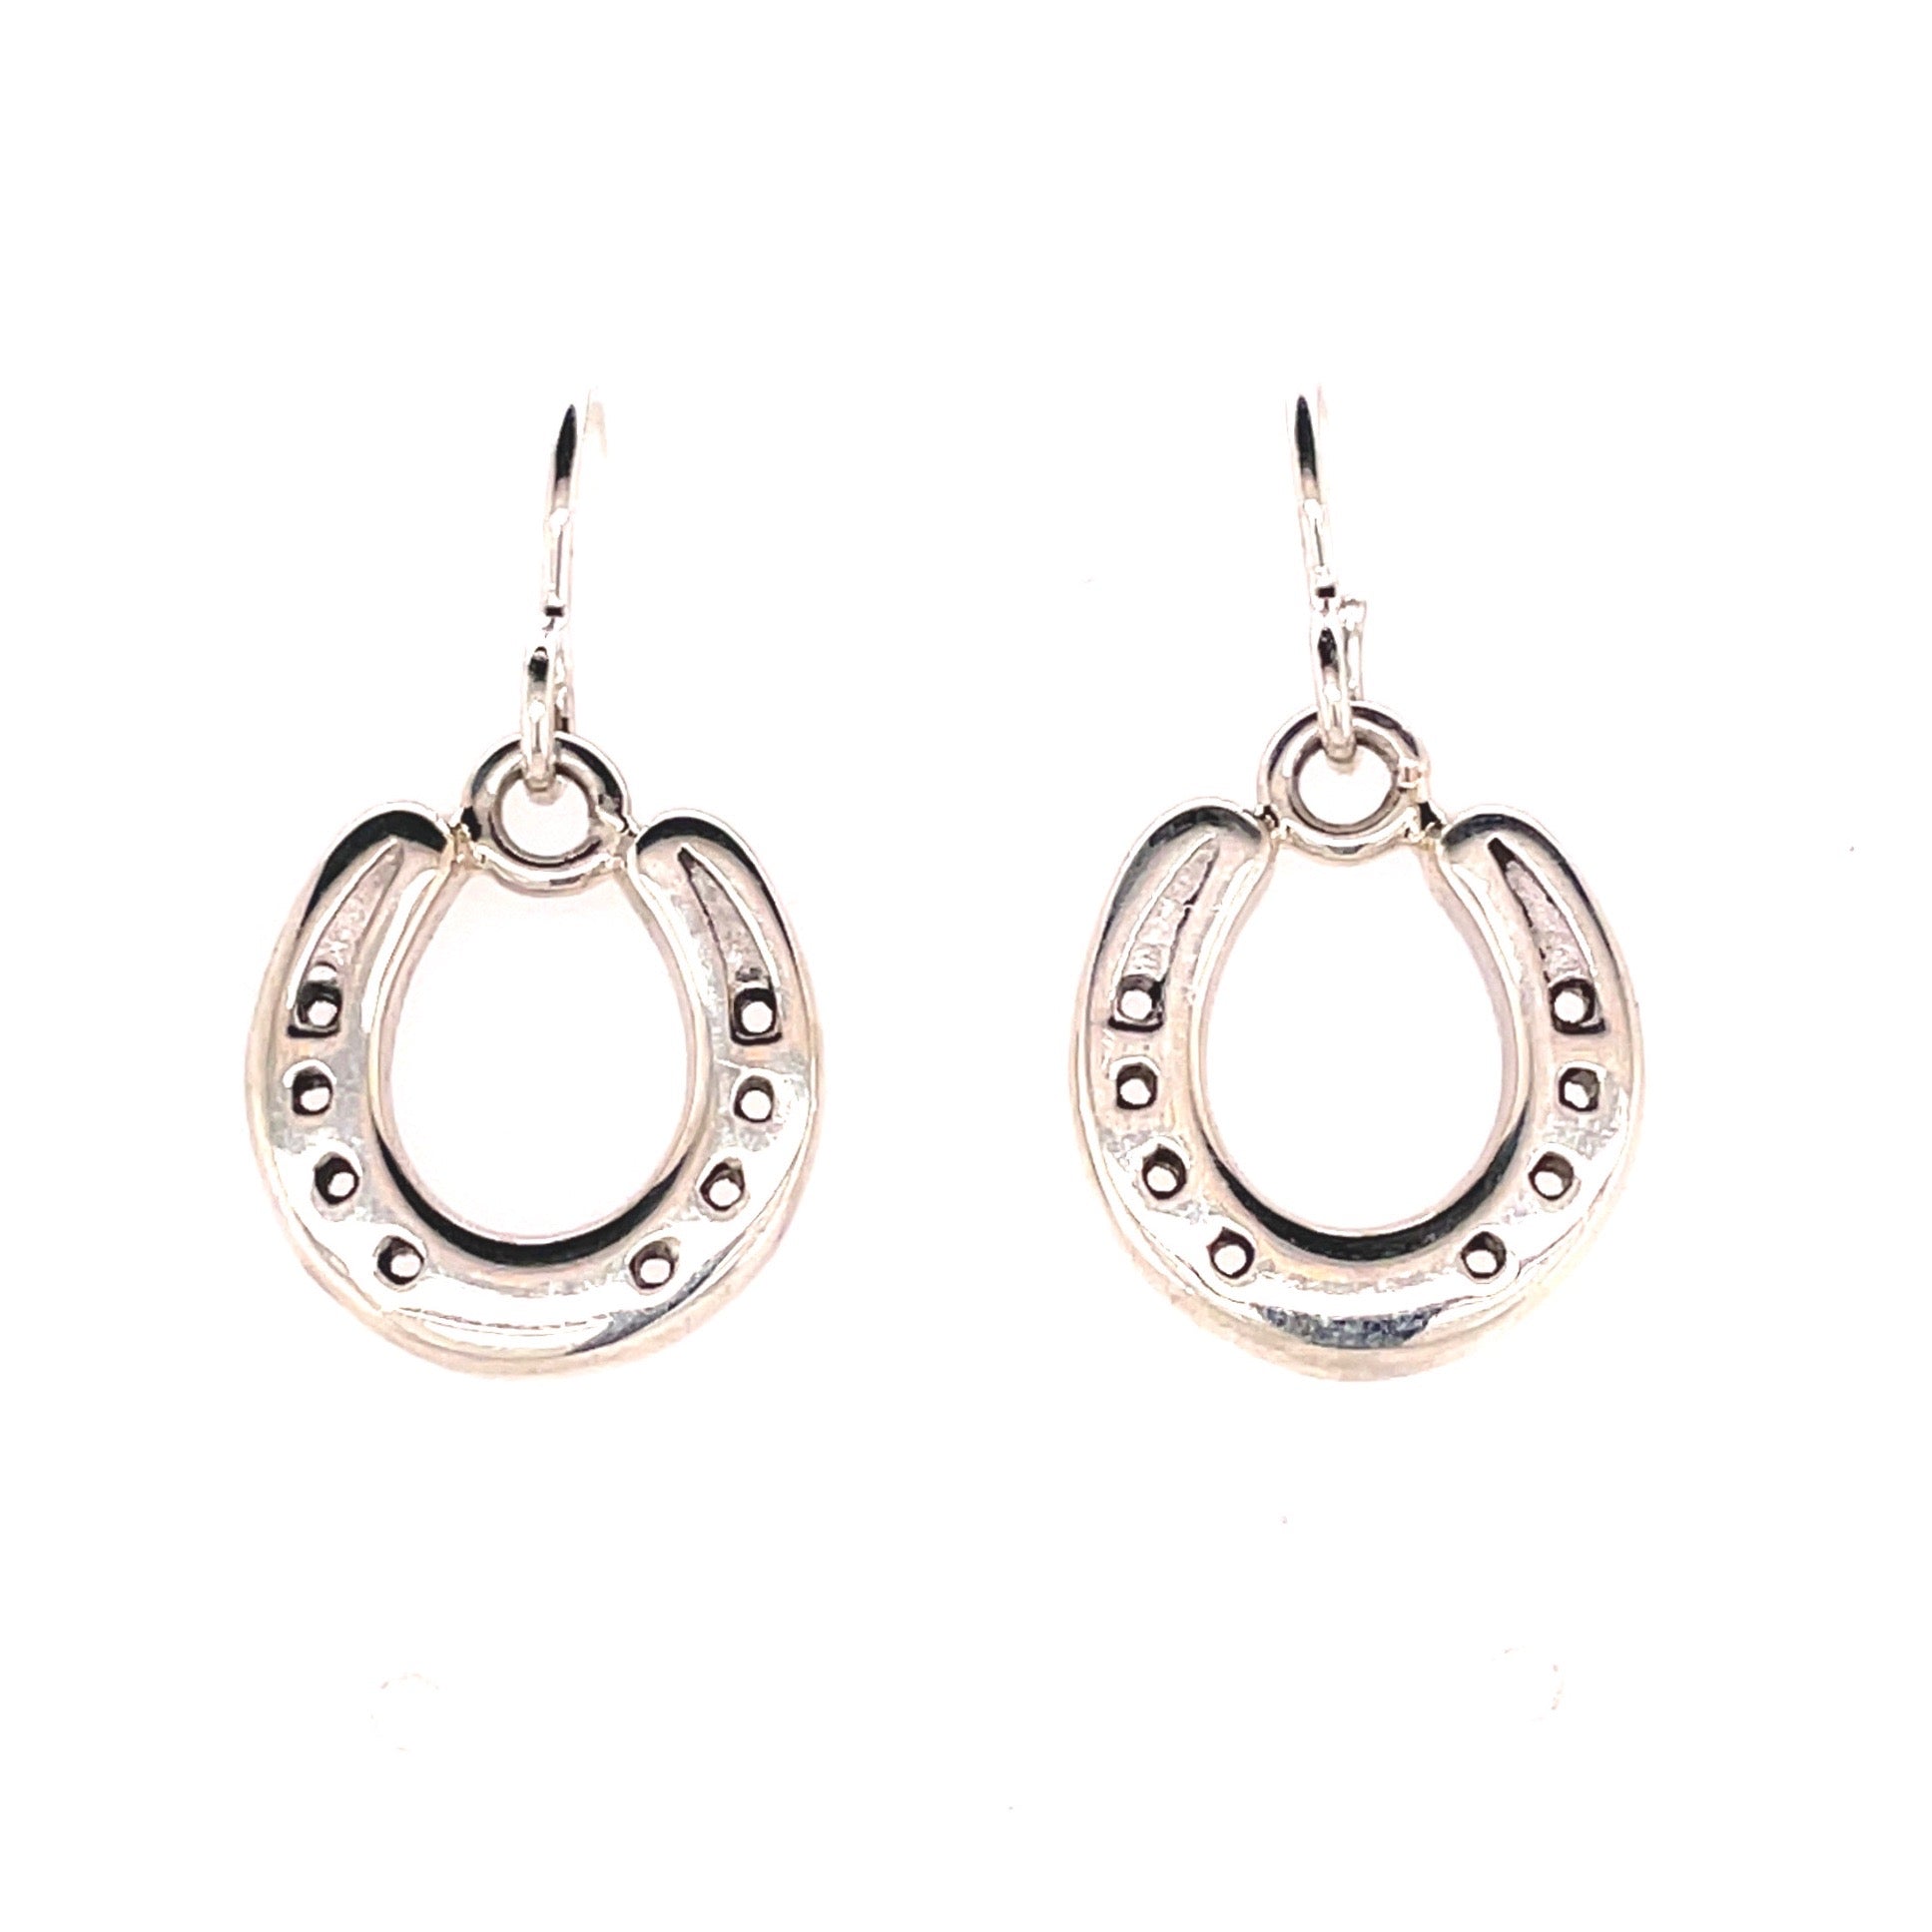 lucky silver horseshoe earrings